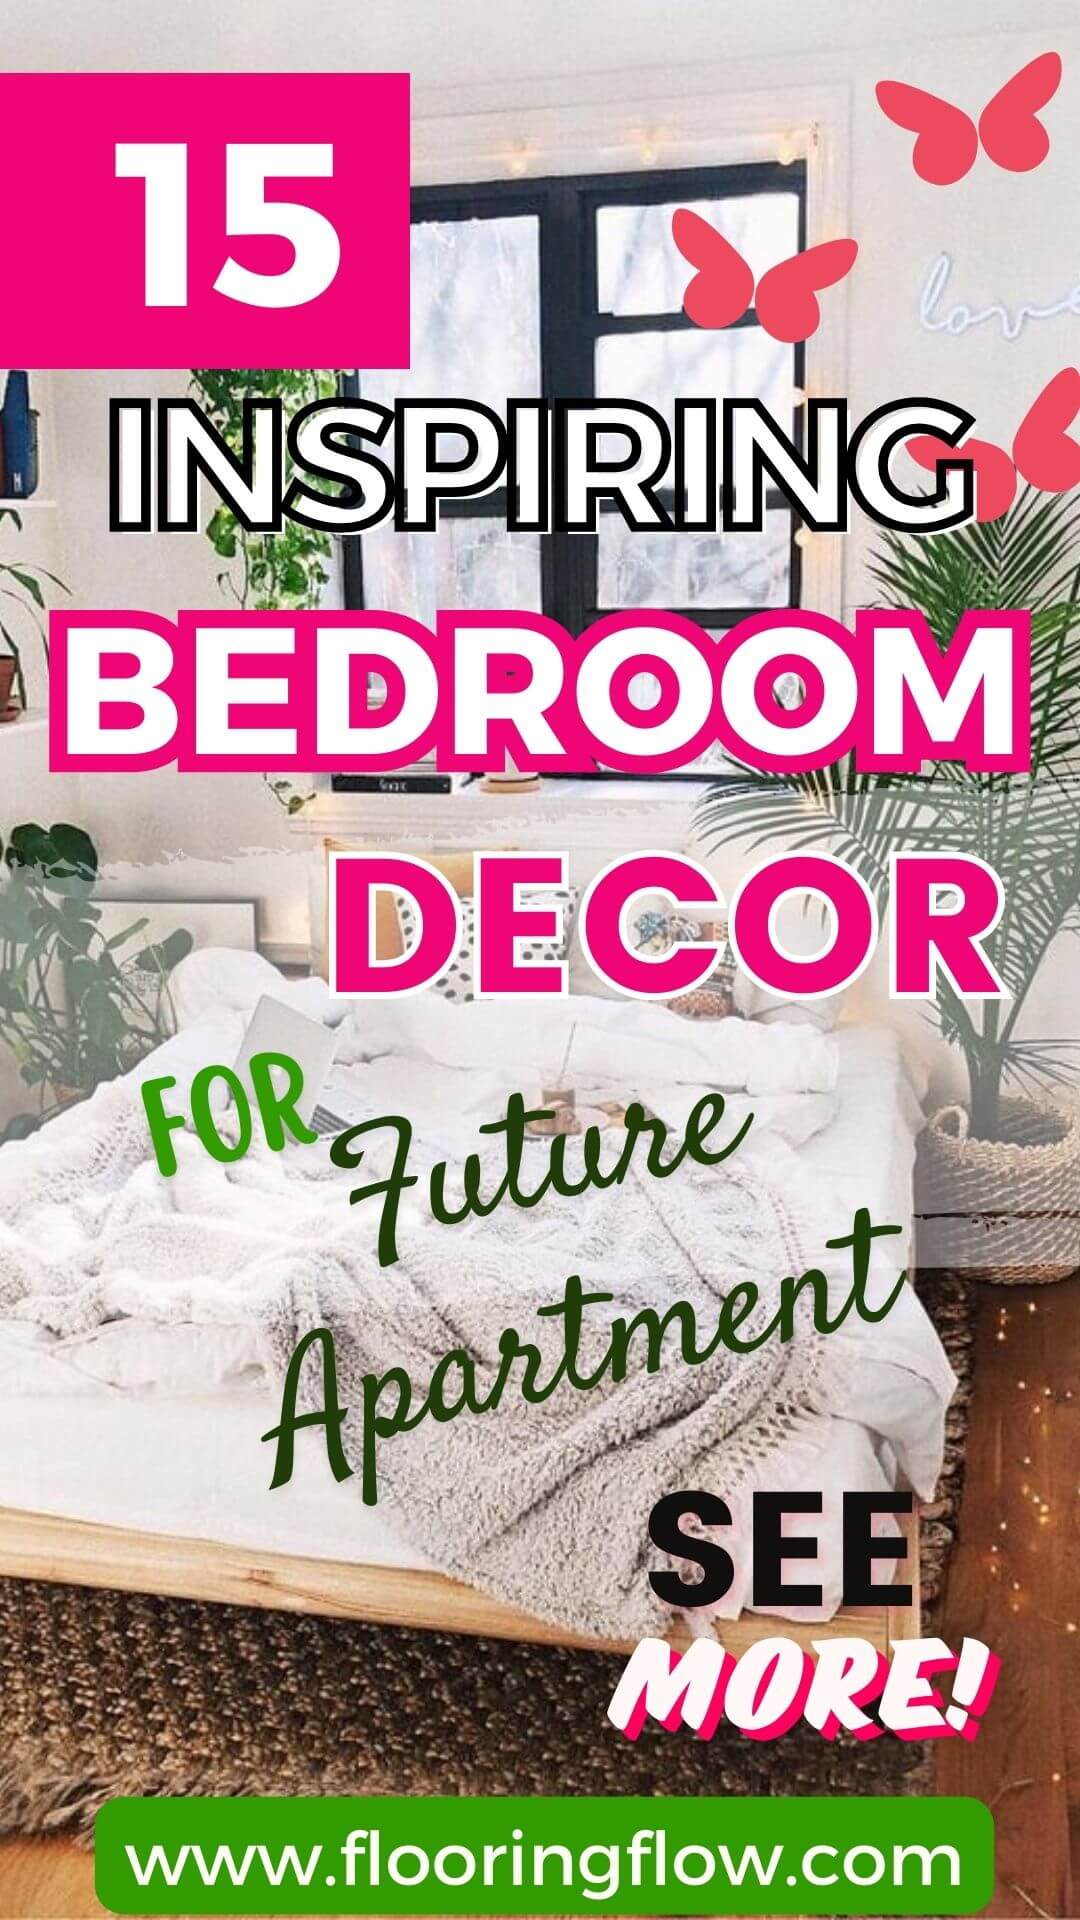 Bedroom Decor for Future Apartment